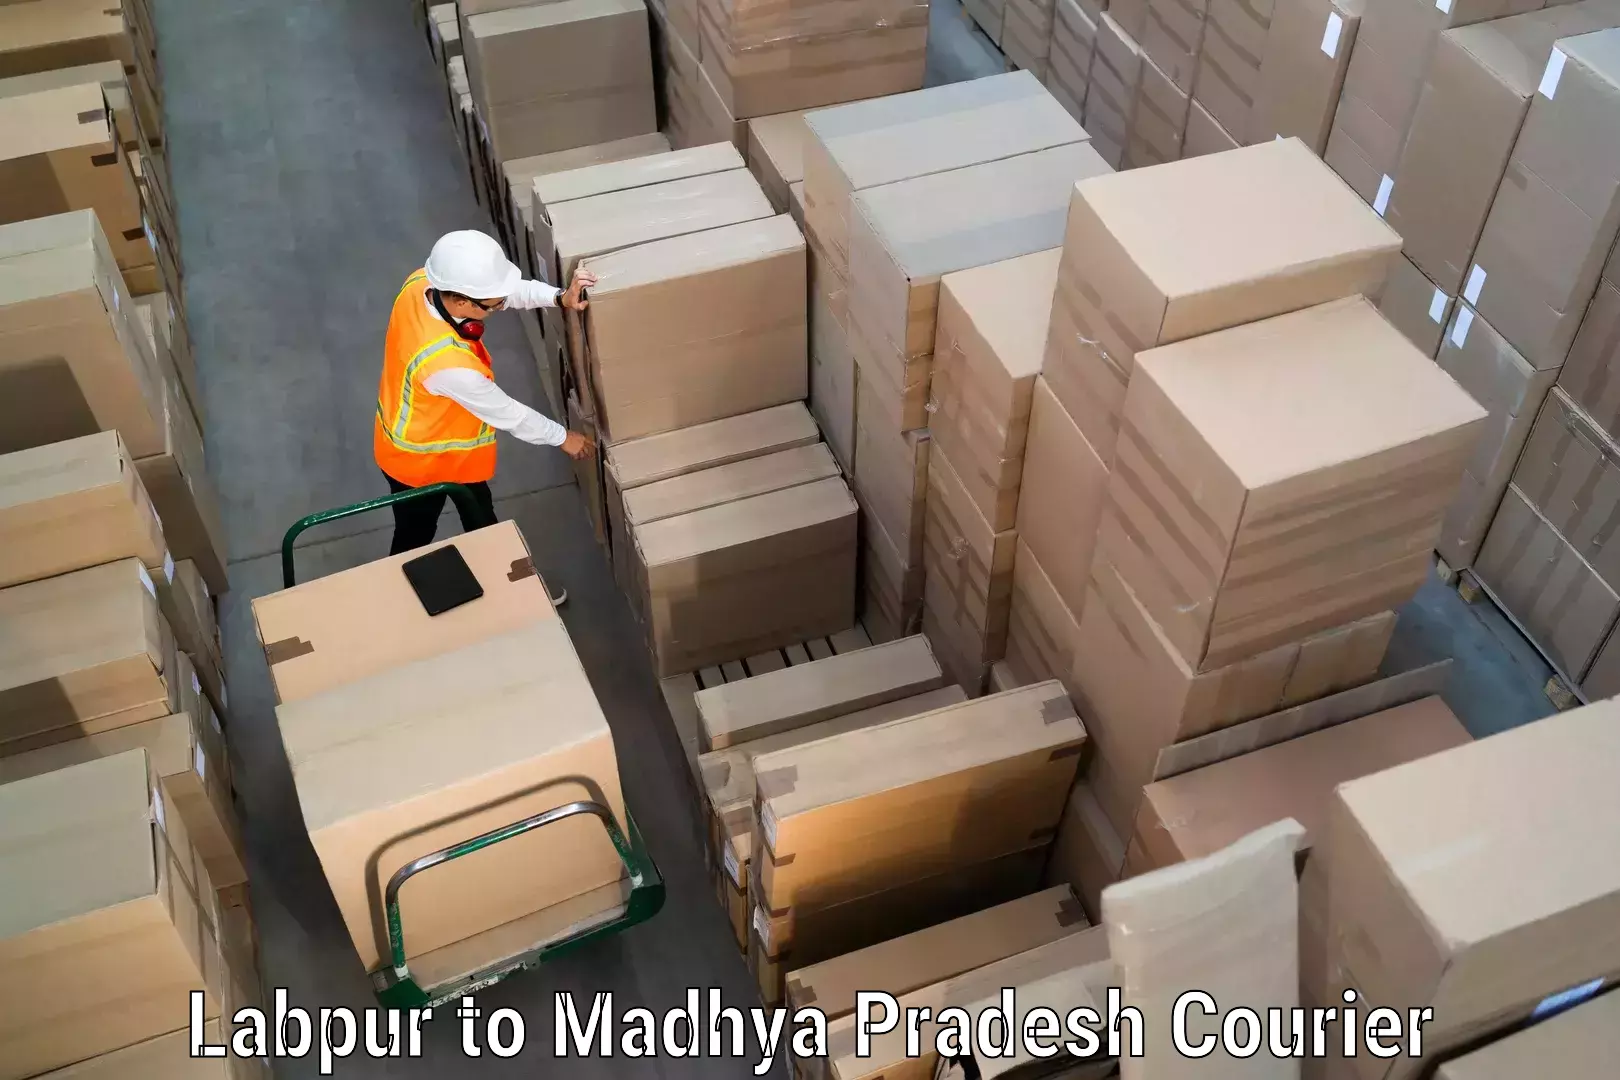 Fast-track shipping solutions Labpur to Chitrangi